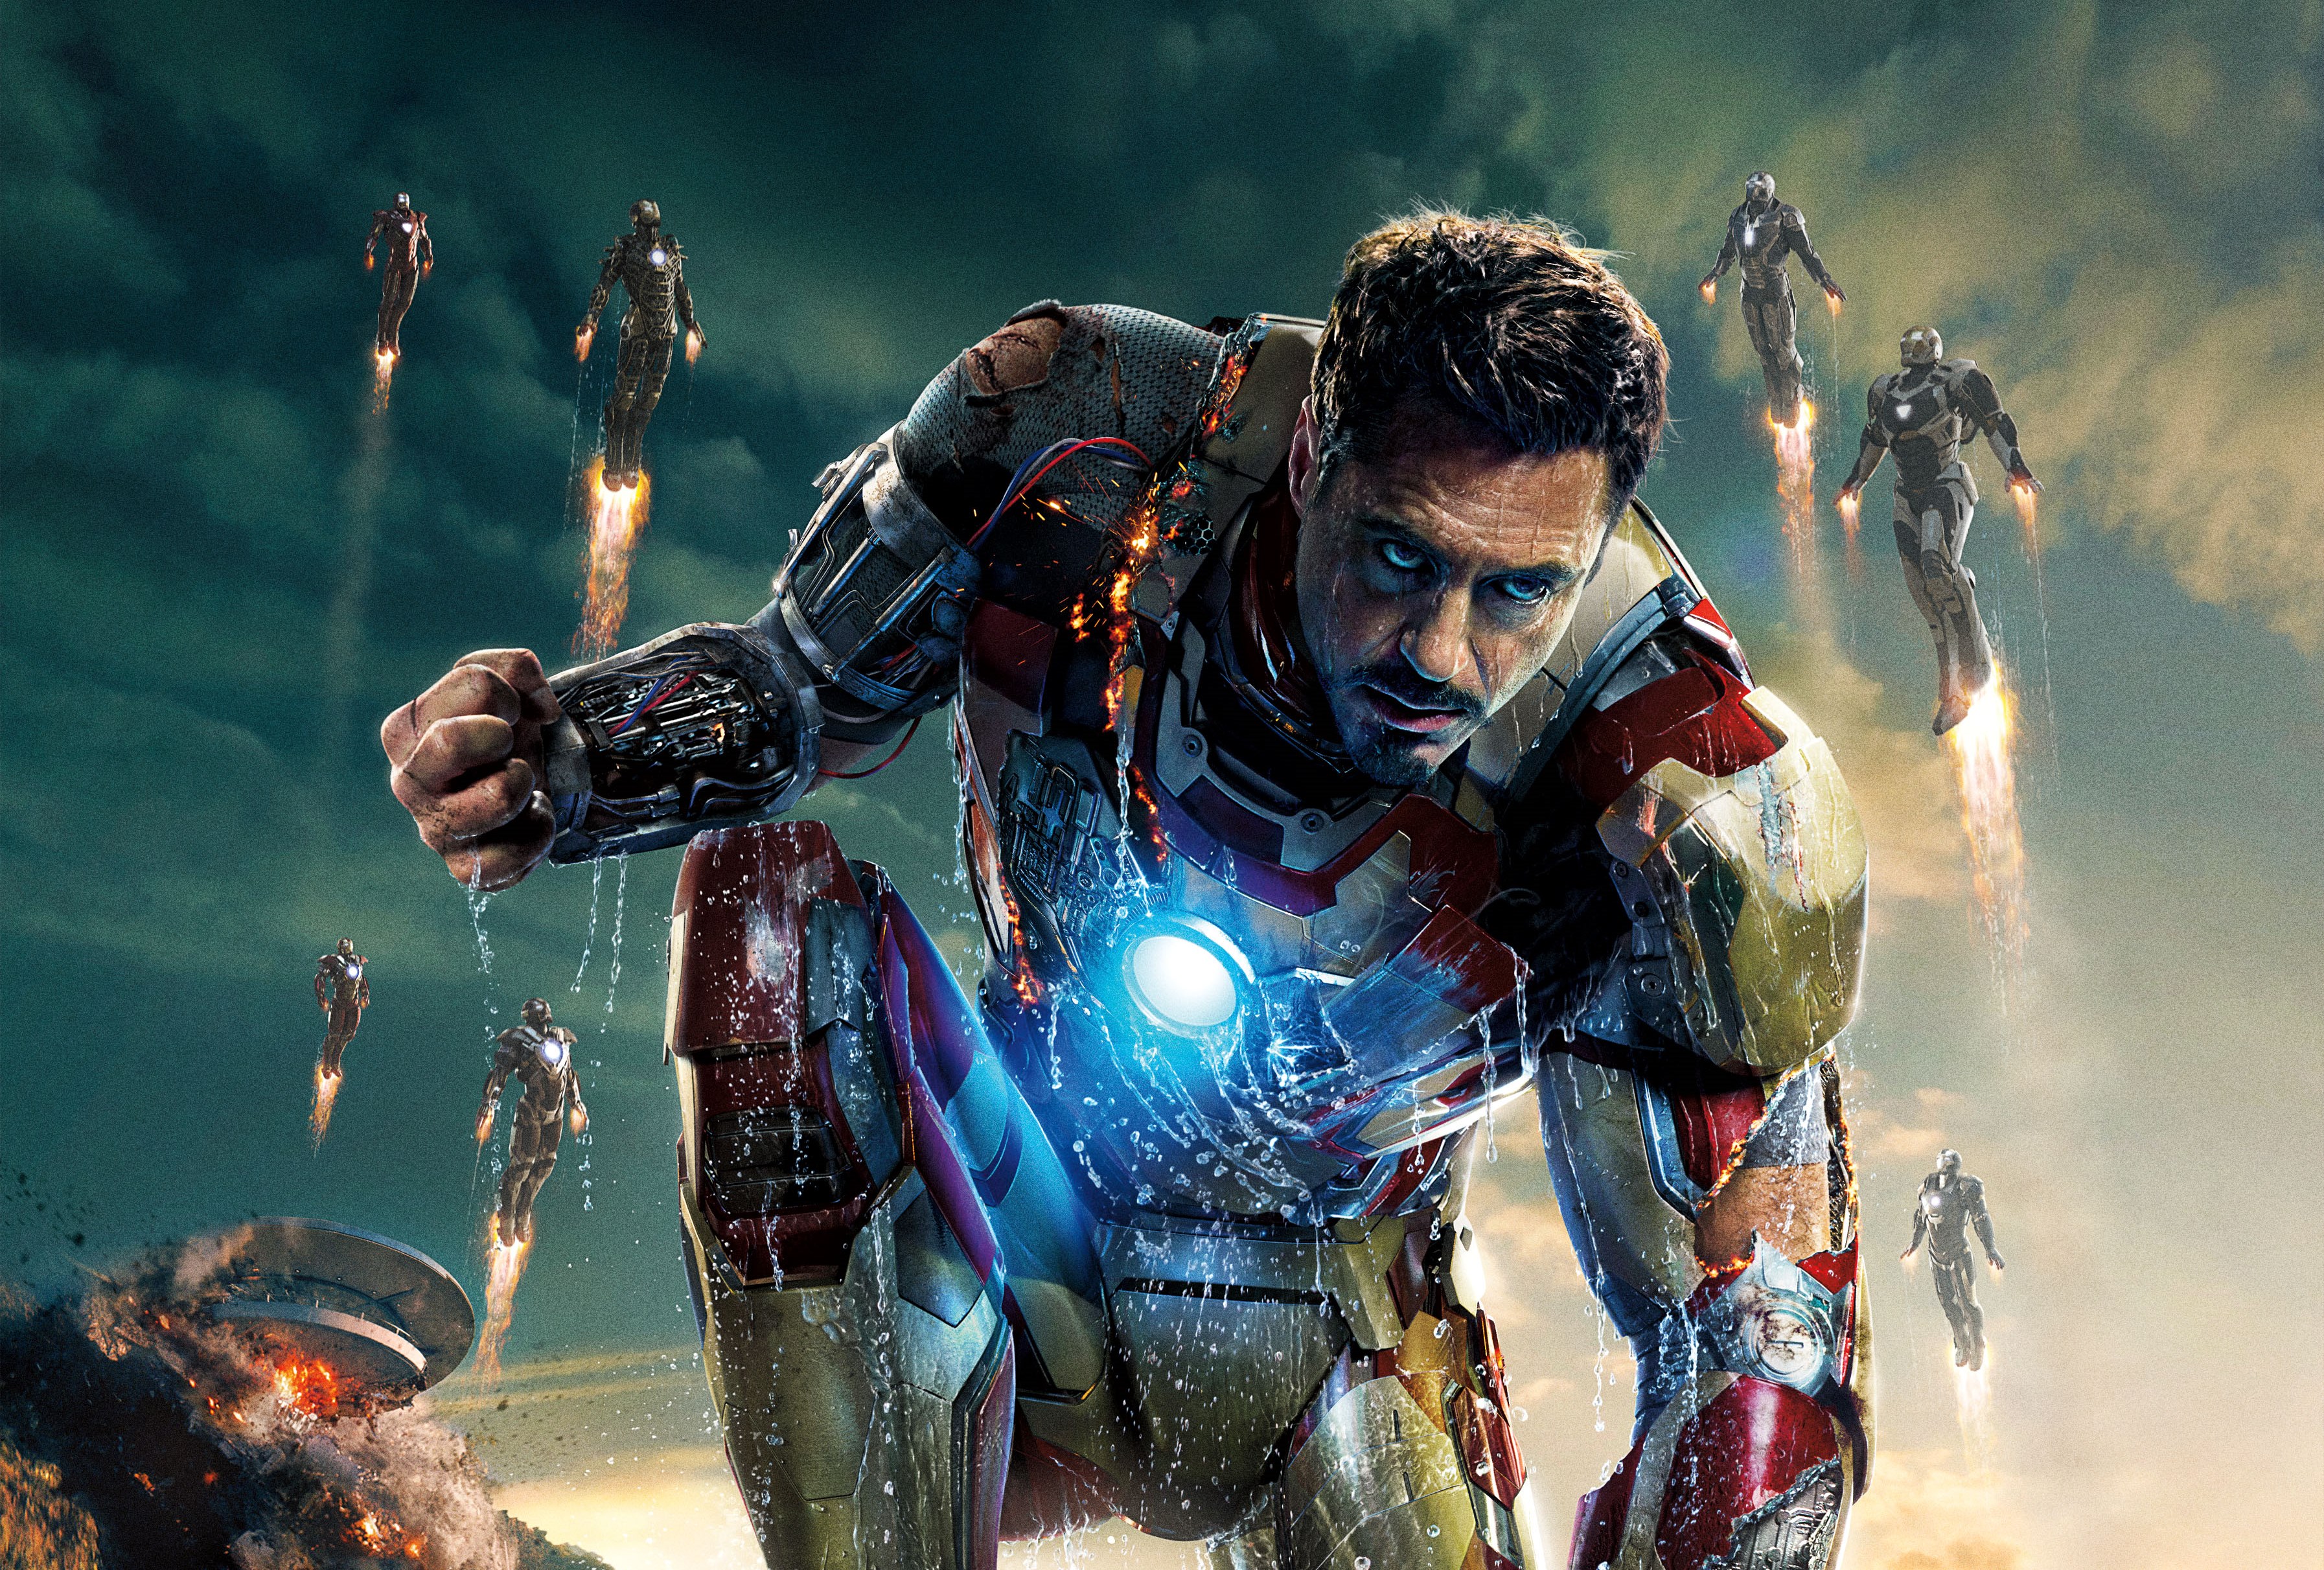 Iron Man 3 Cover